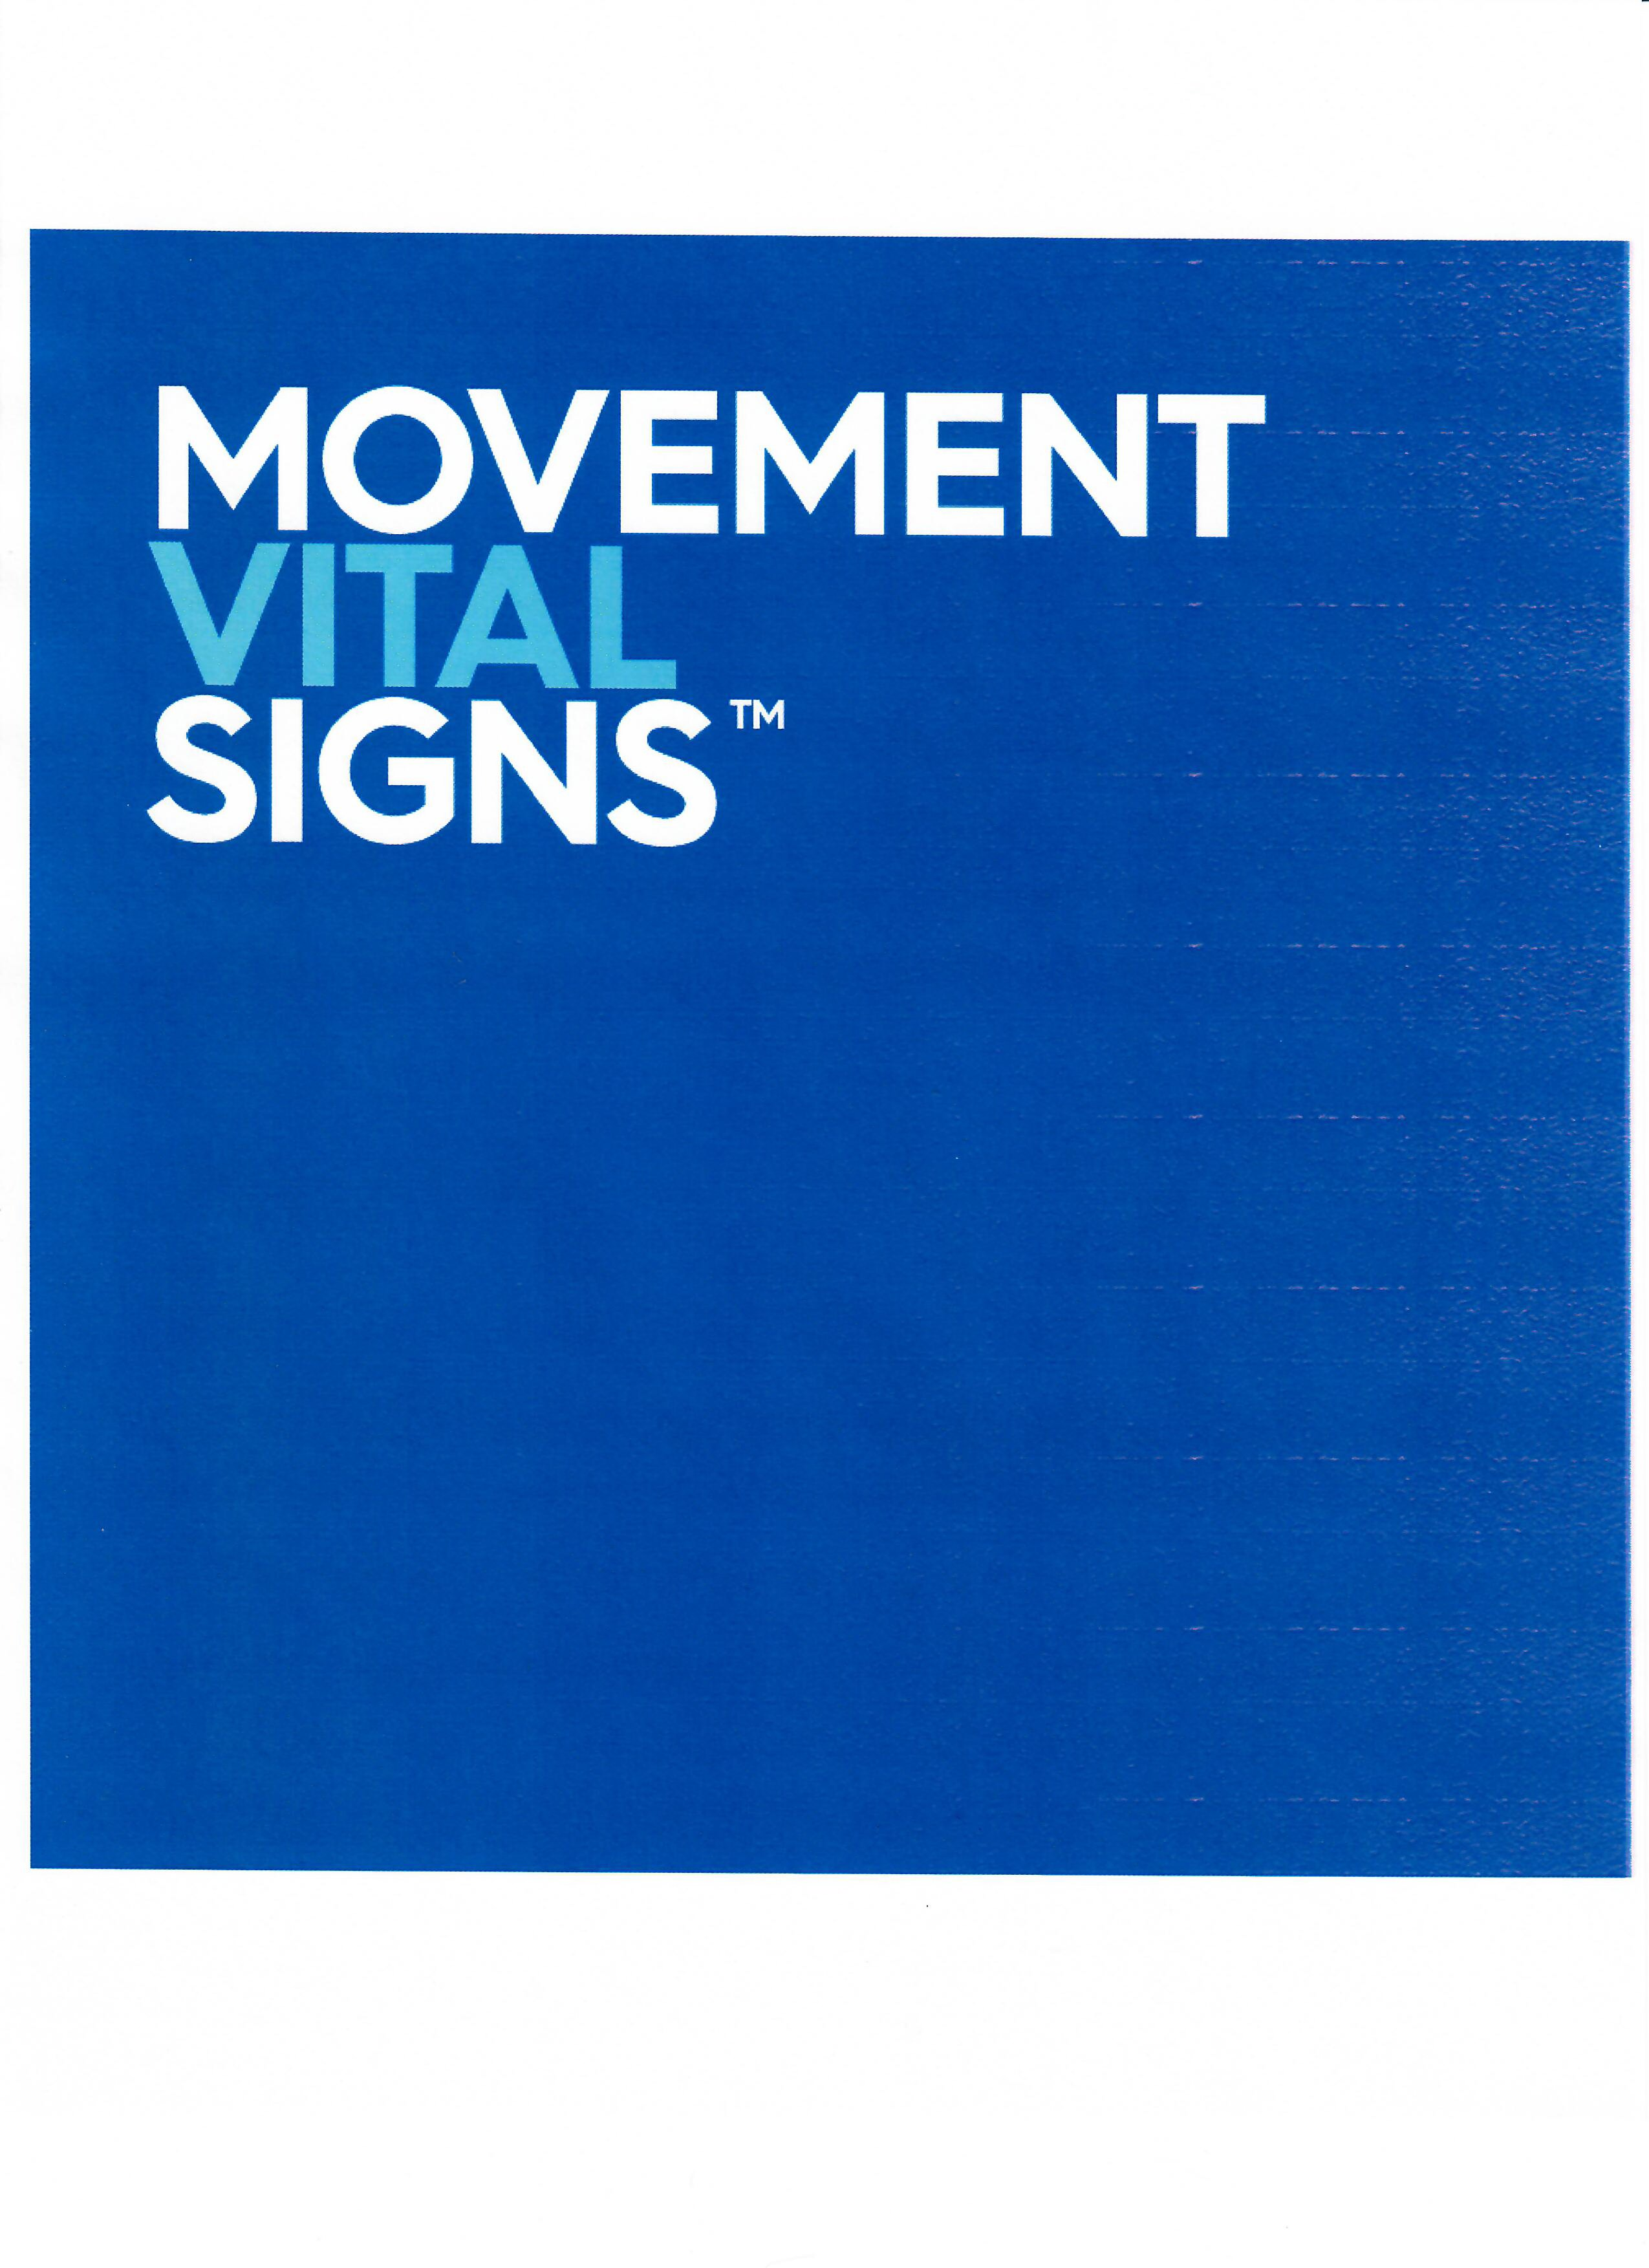  MOVEMENT VITAL SIGNS